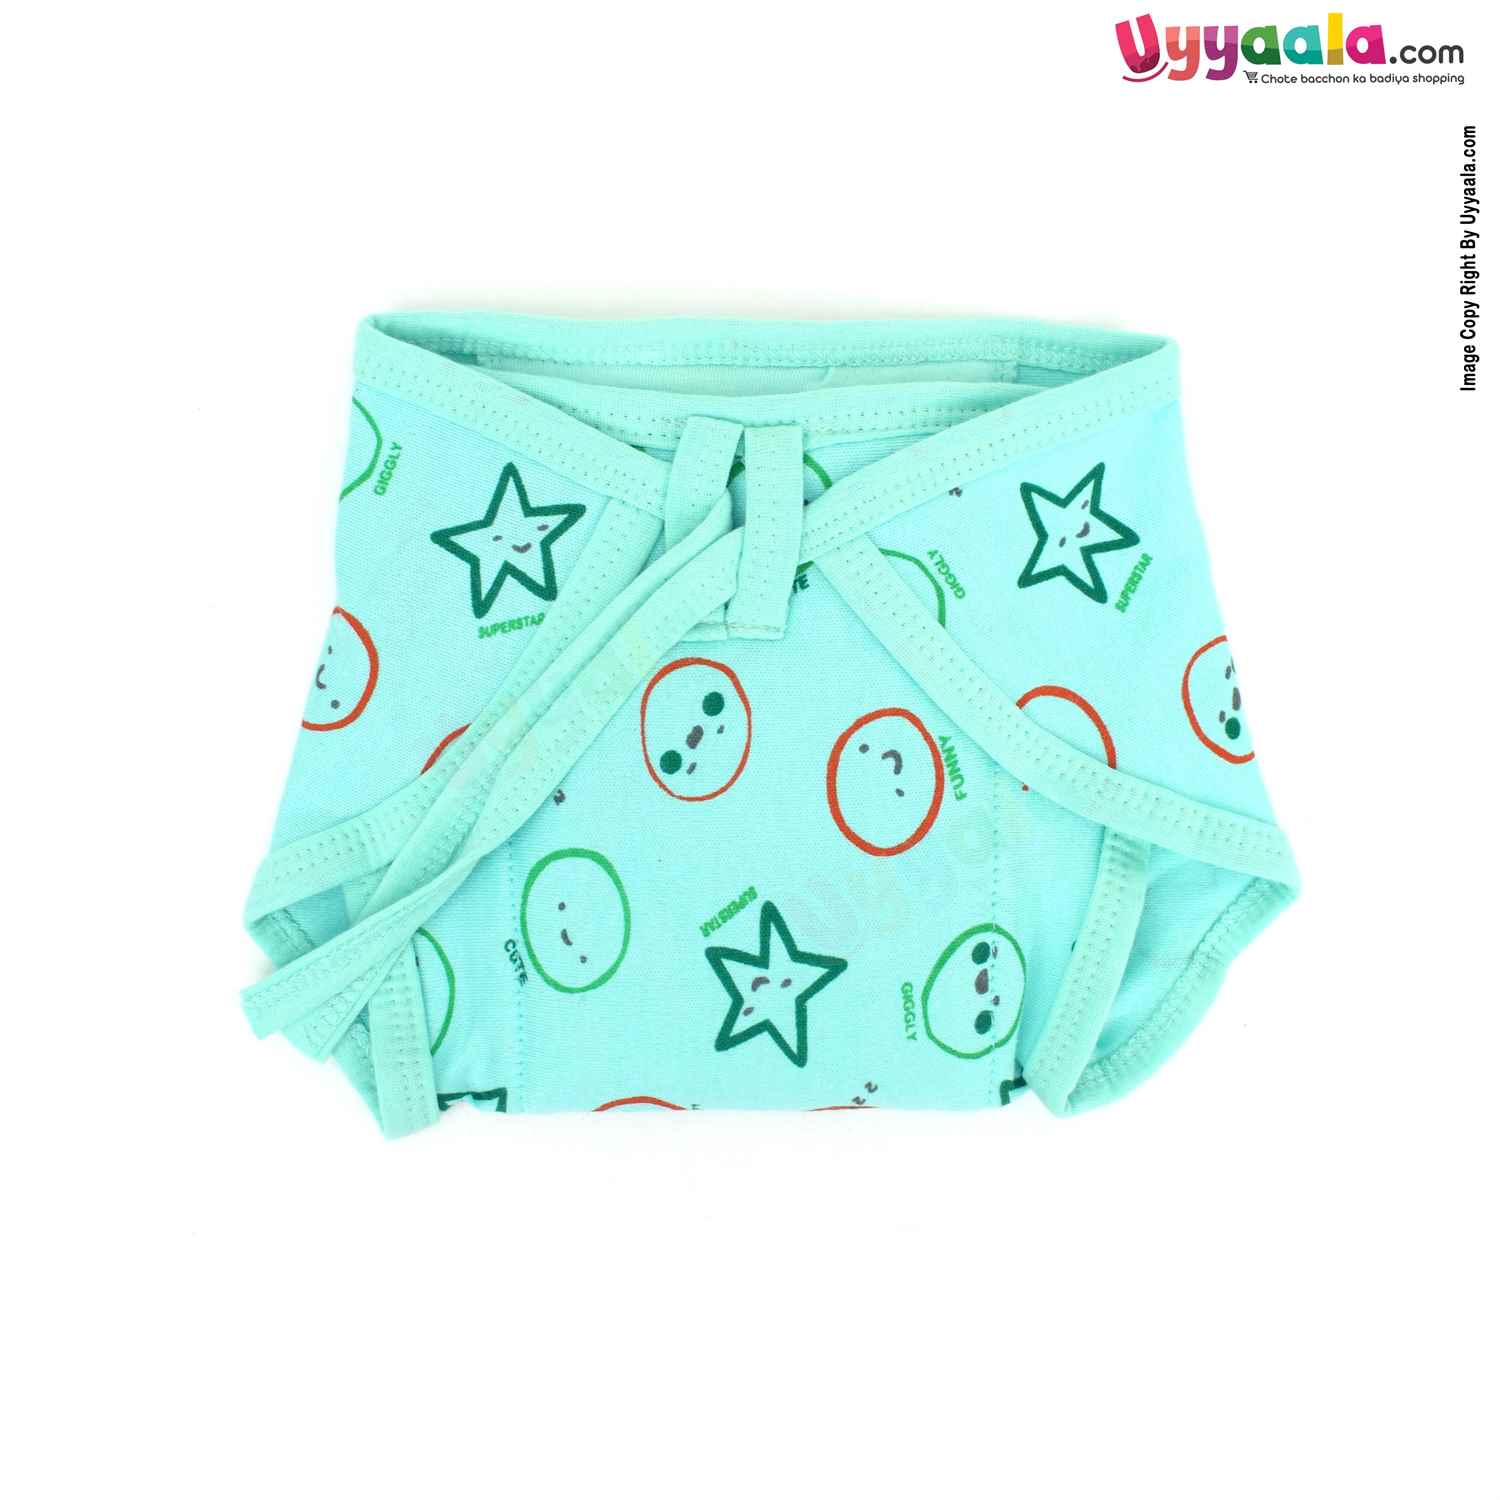 COZYCARE Washable Diapers Hosiery Tying Mode Emoji Print Yellow, Green & Pink 3P Set (M)